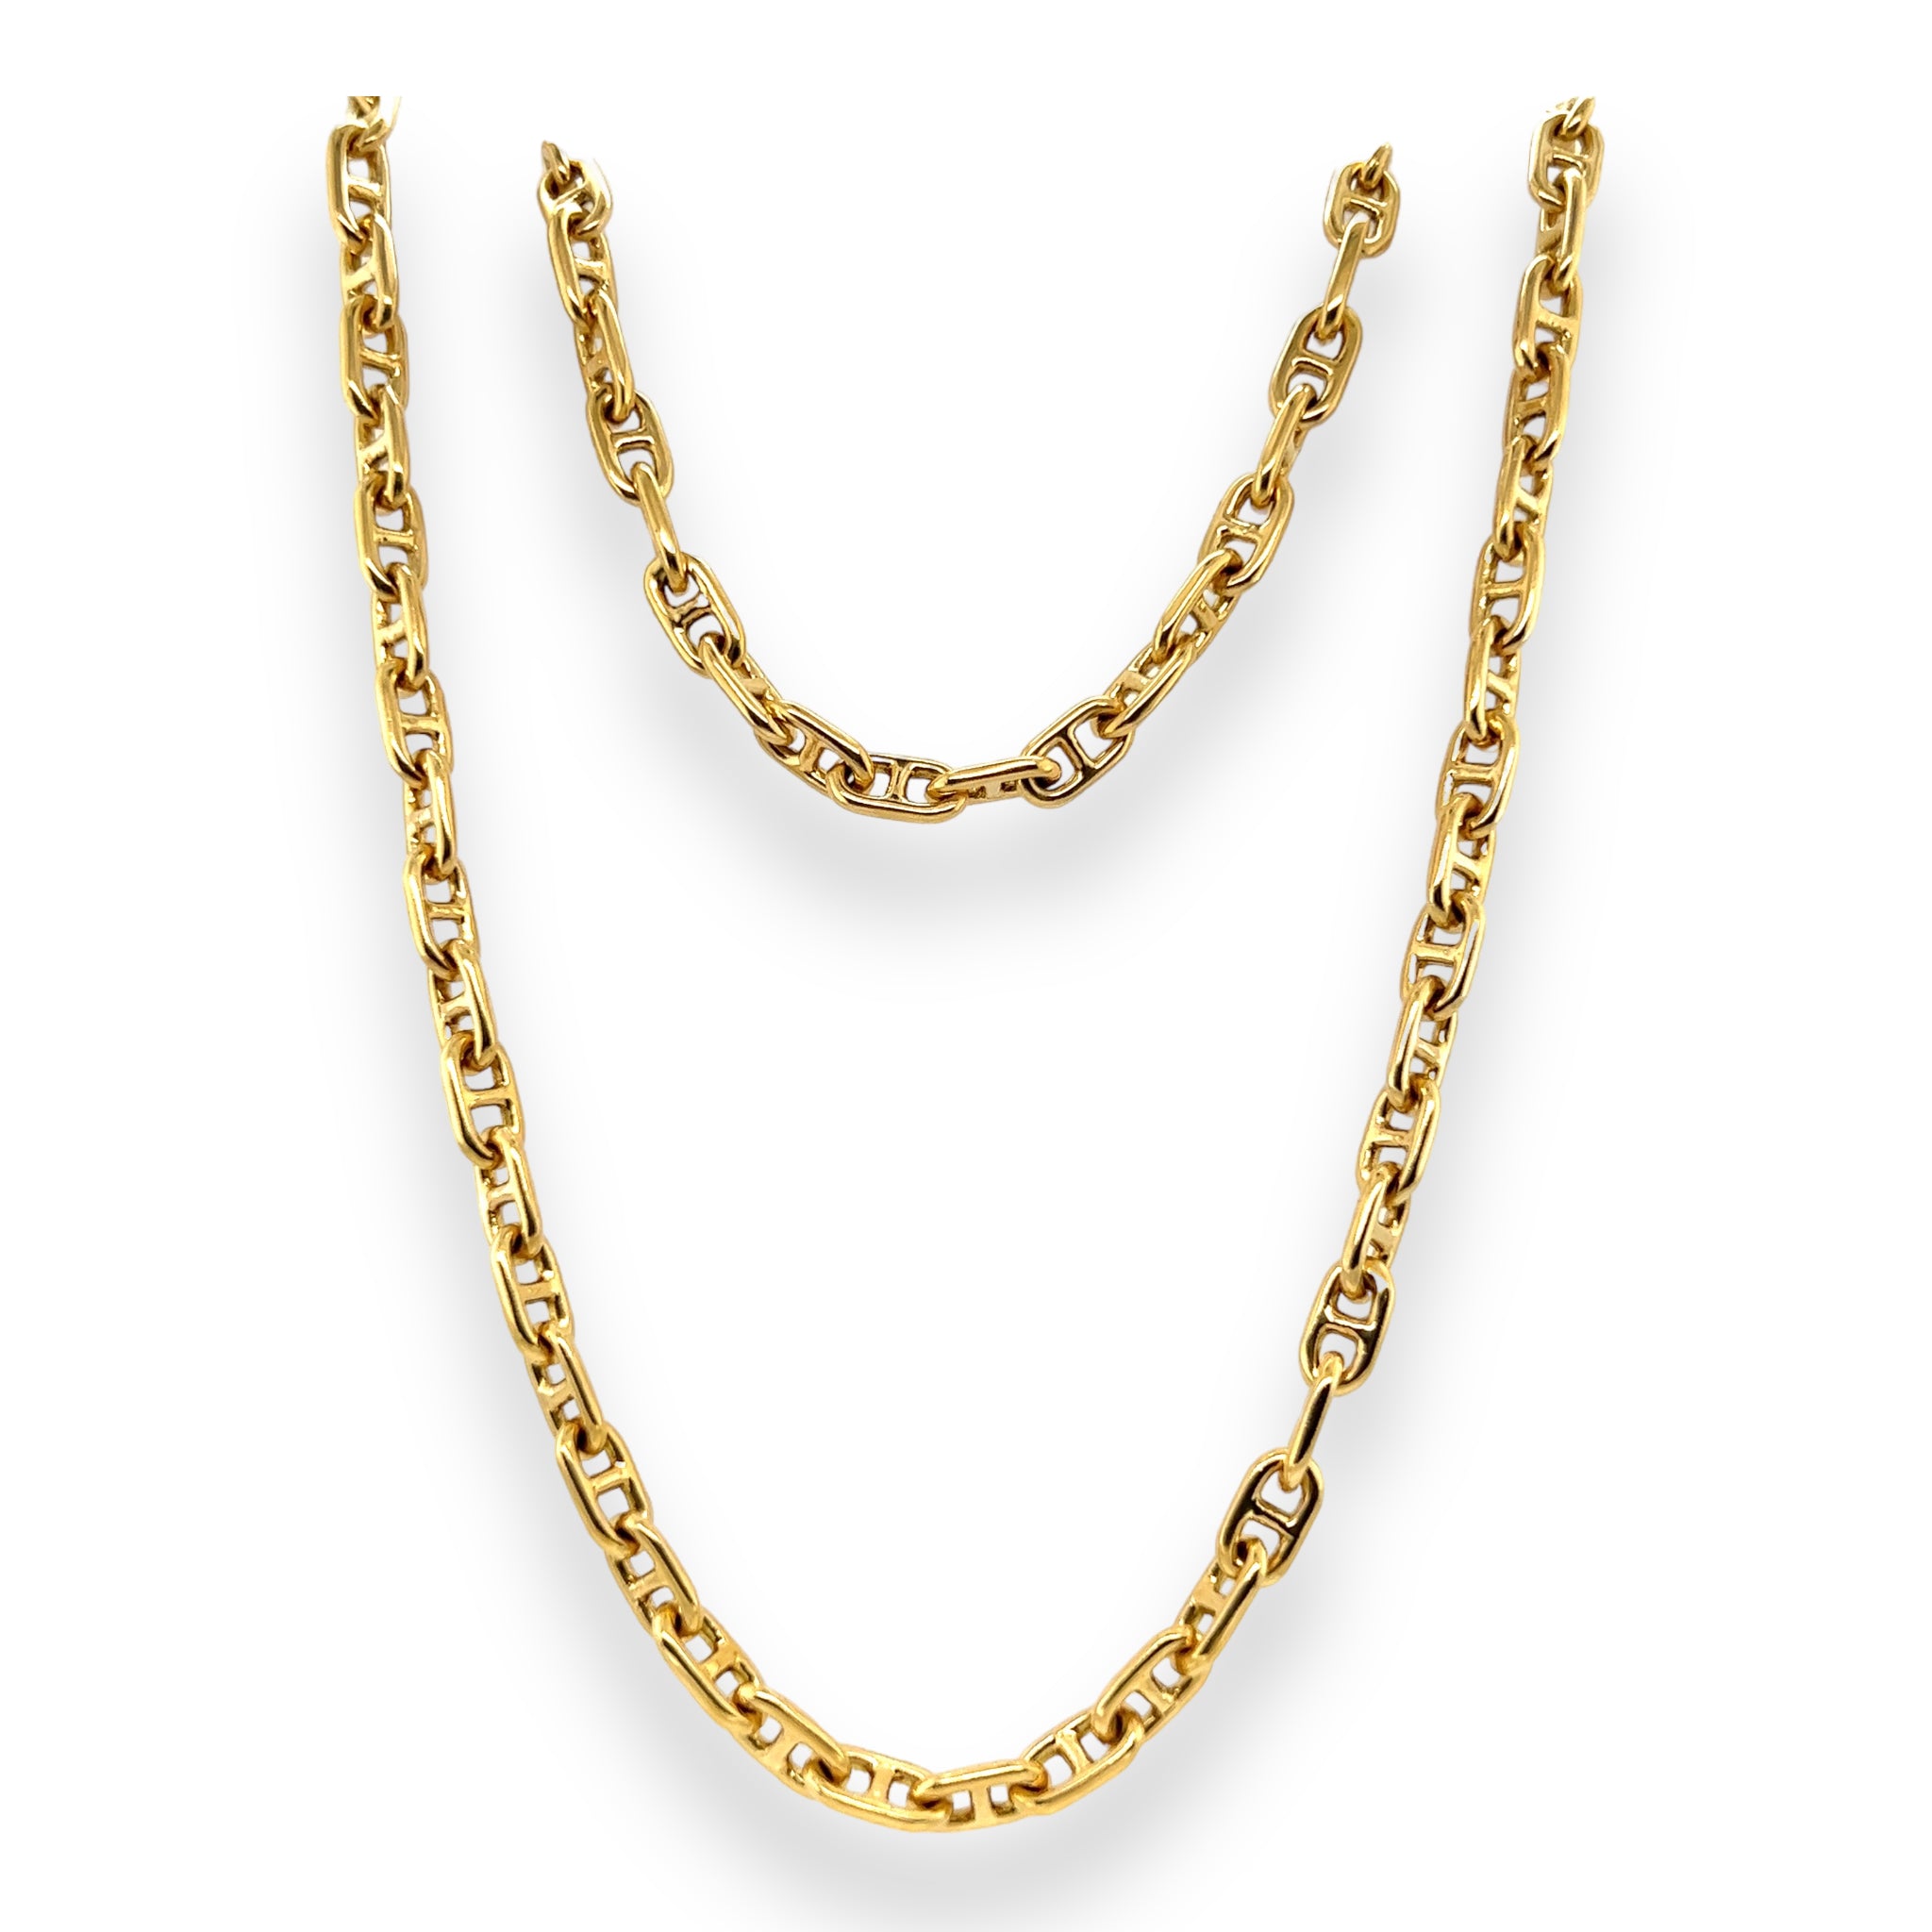 Vintage Hermes Paris Chain d'Ancre necklace in 18ct Gold